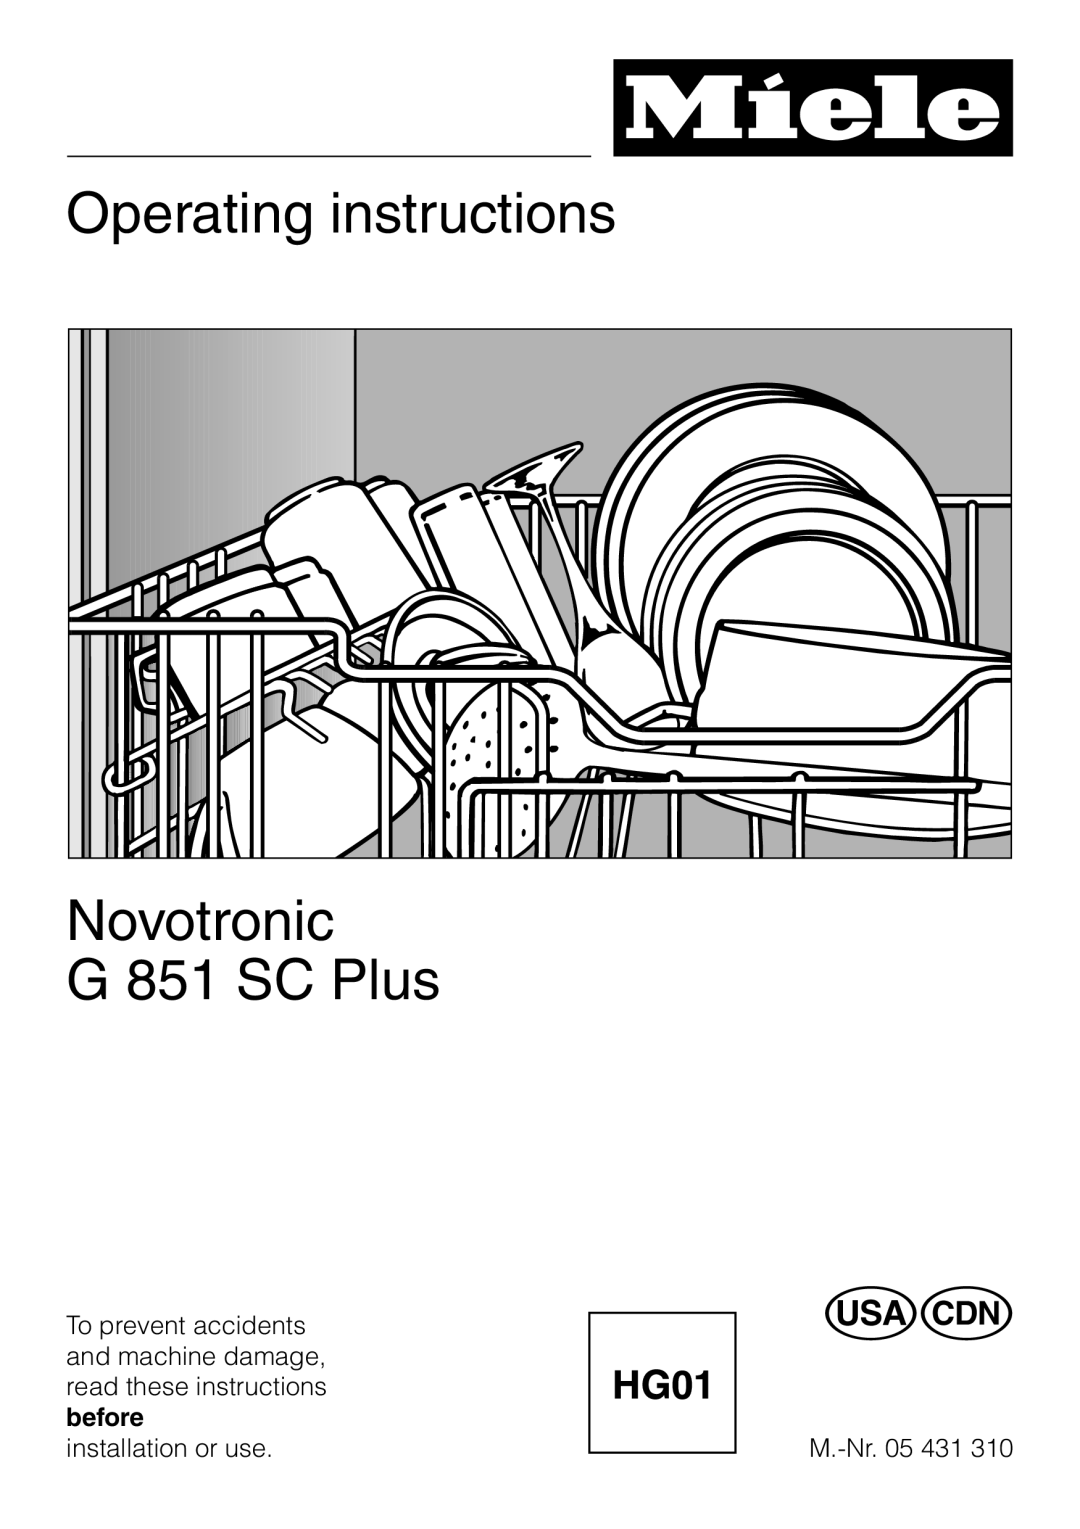 Miele operating instructions Operating instructions, Novotronic G 851 SC Plus 